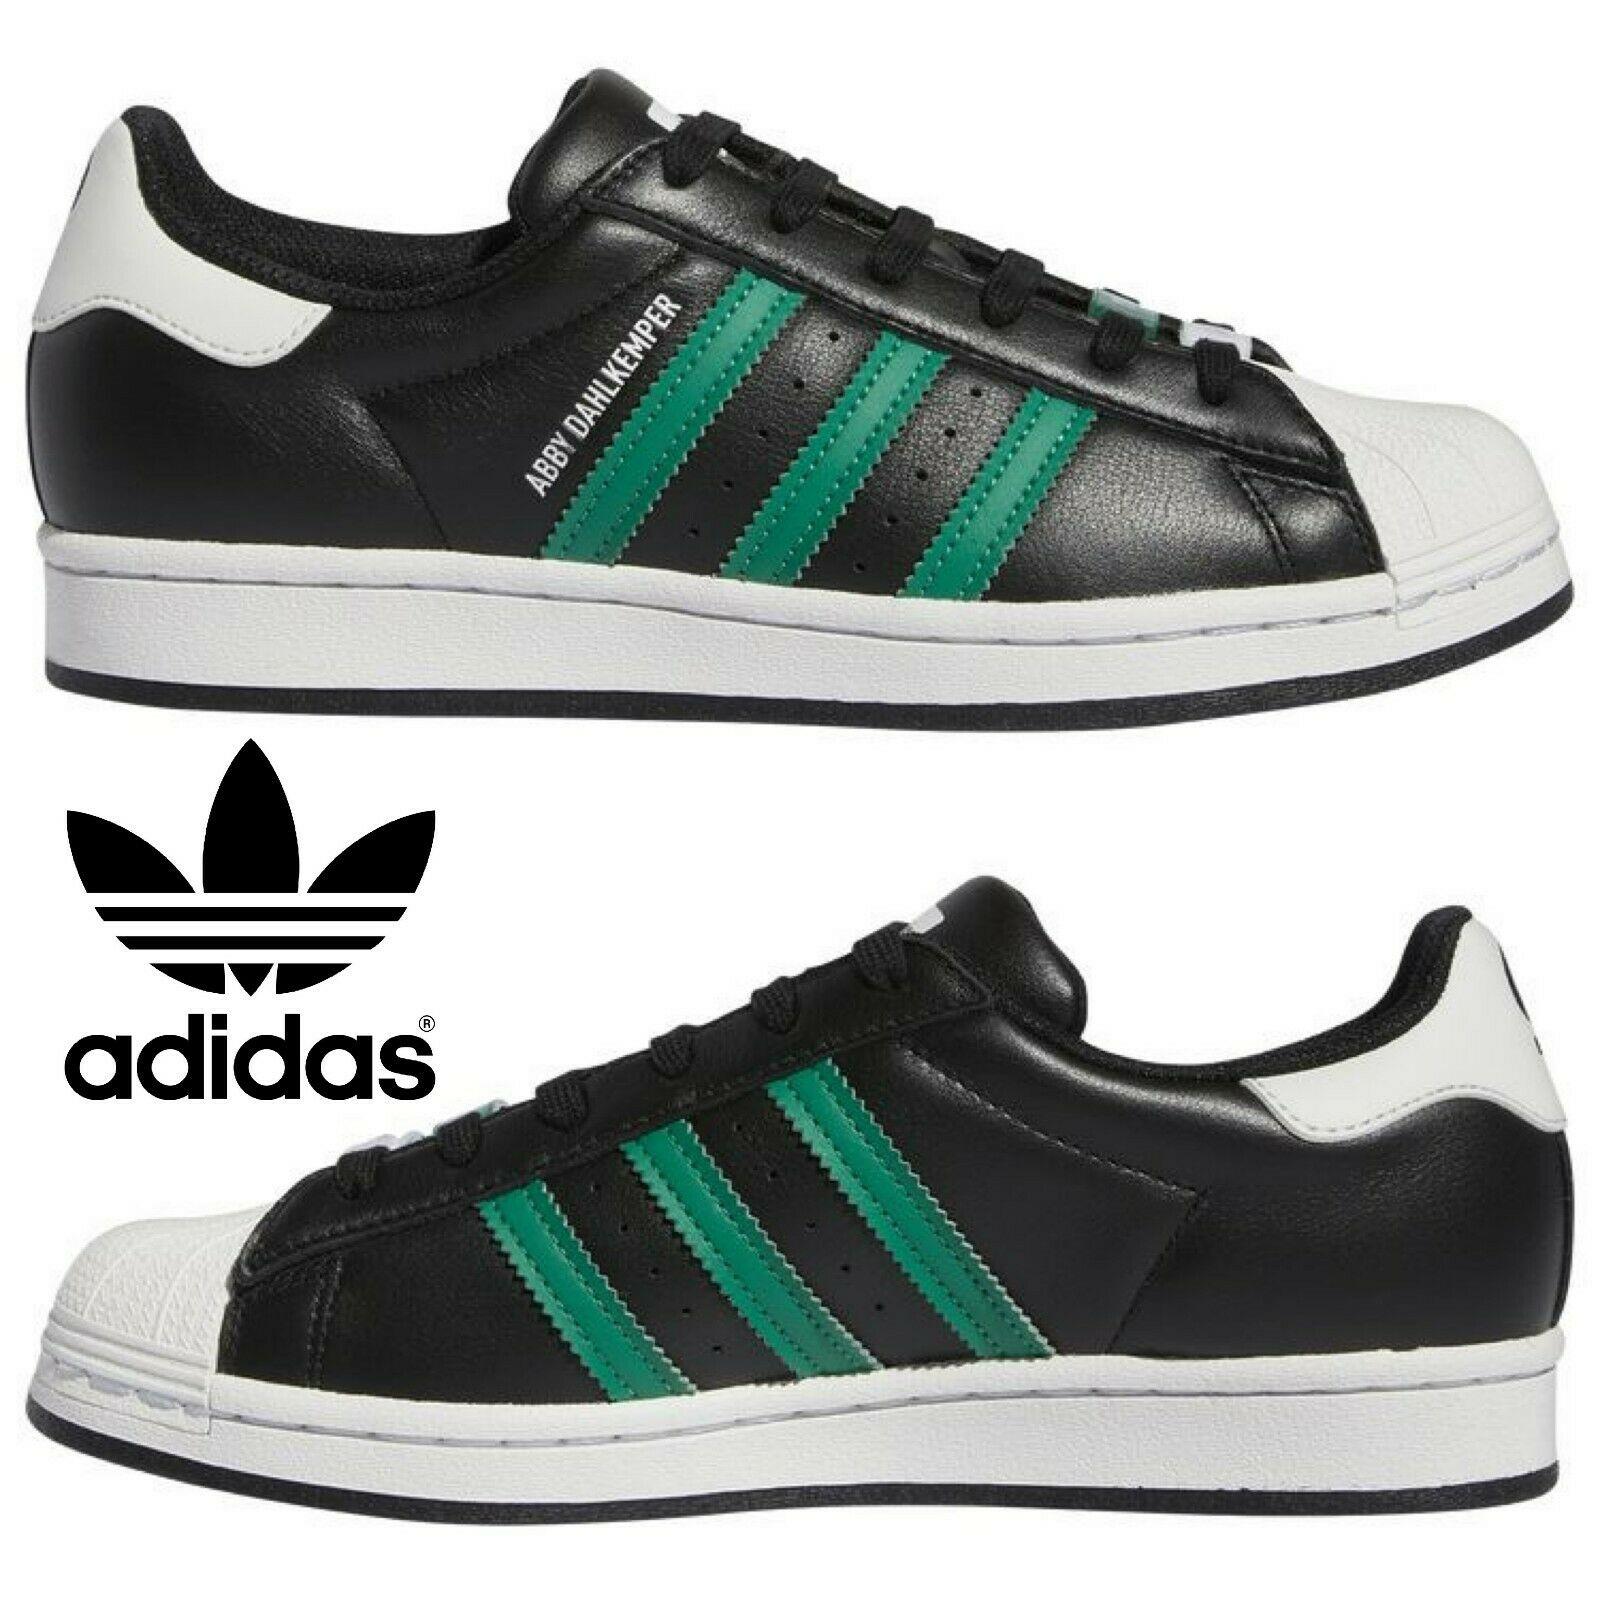 Adidas Originals Superstar Women s Sneakers Casual Shoes Sport Gym Black Green